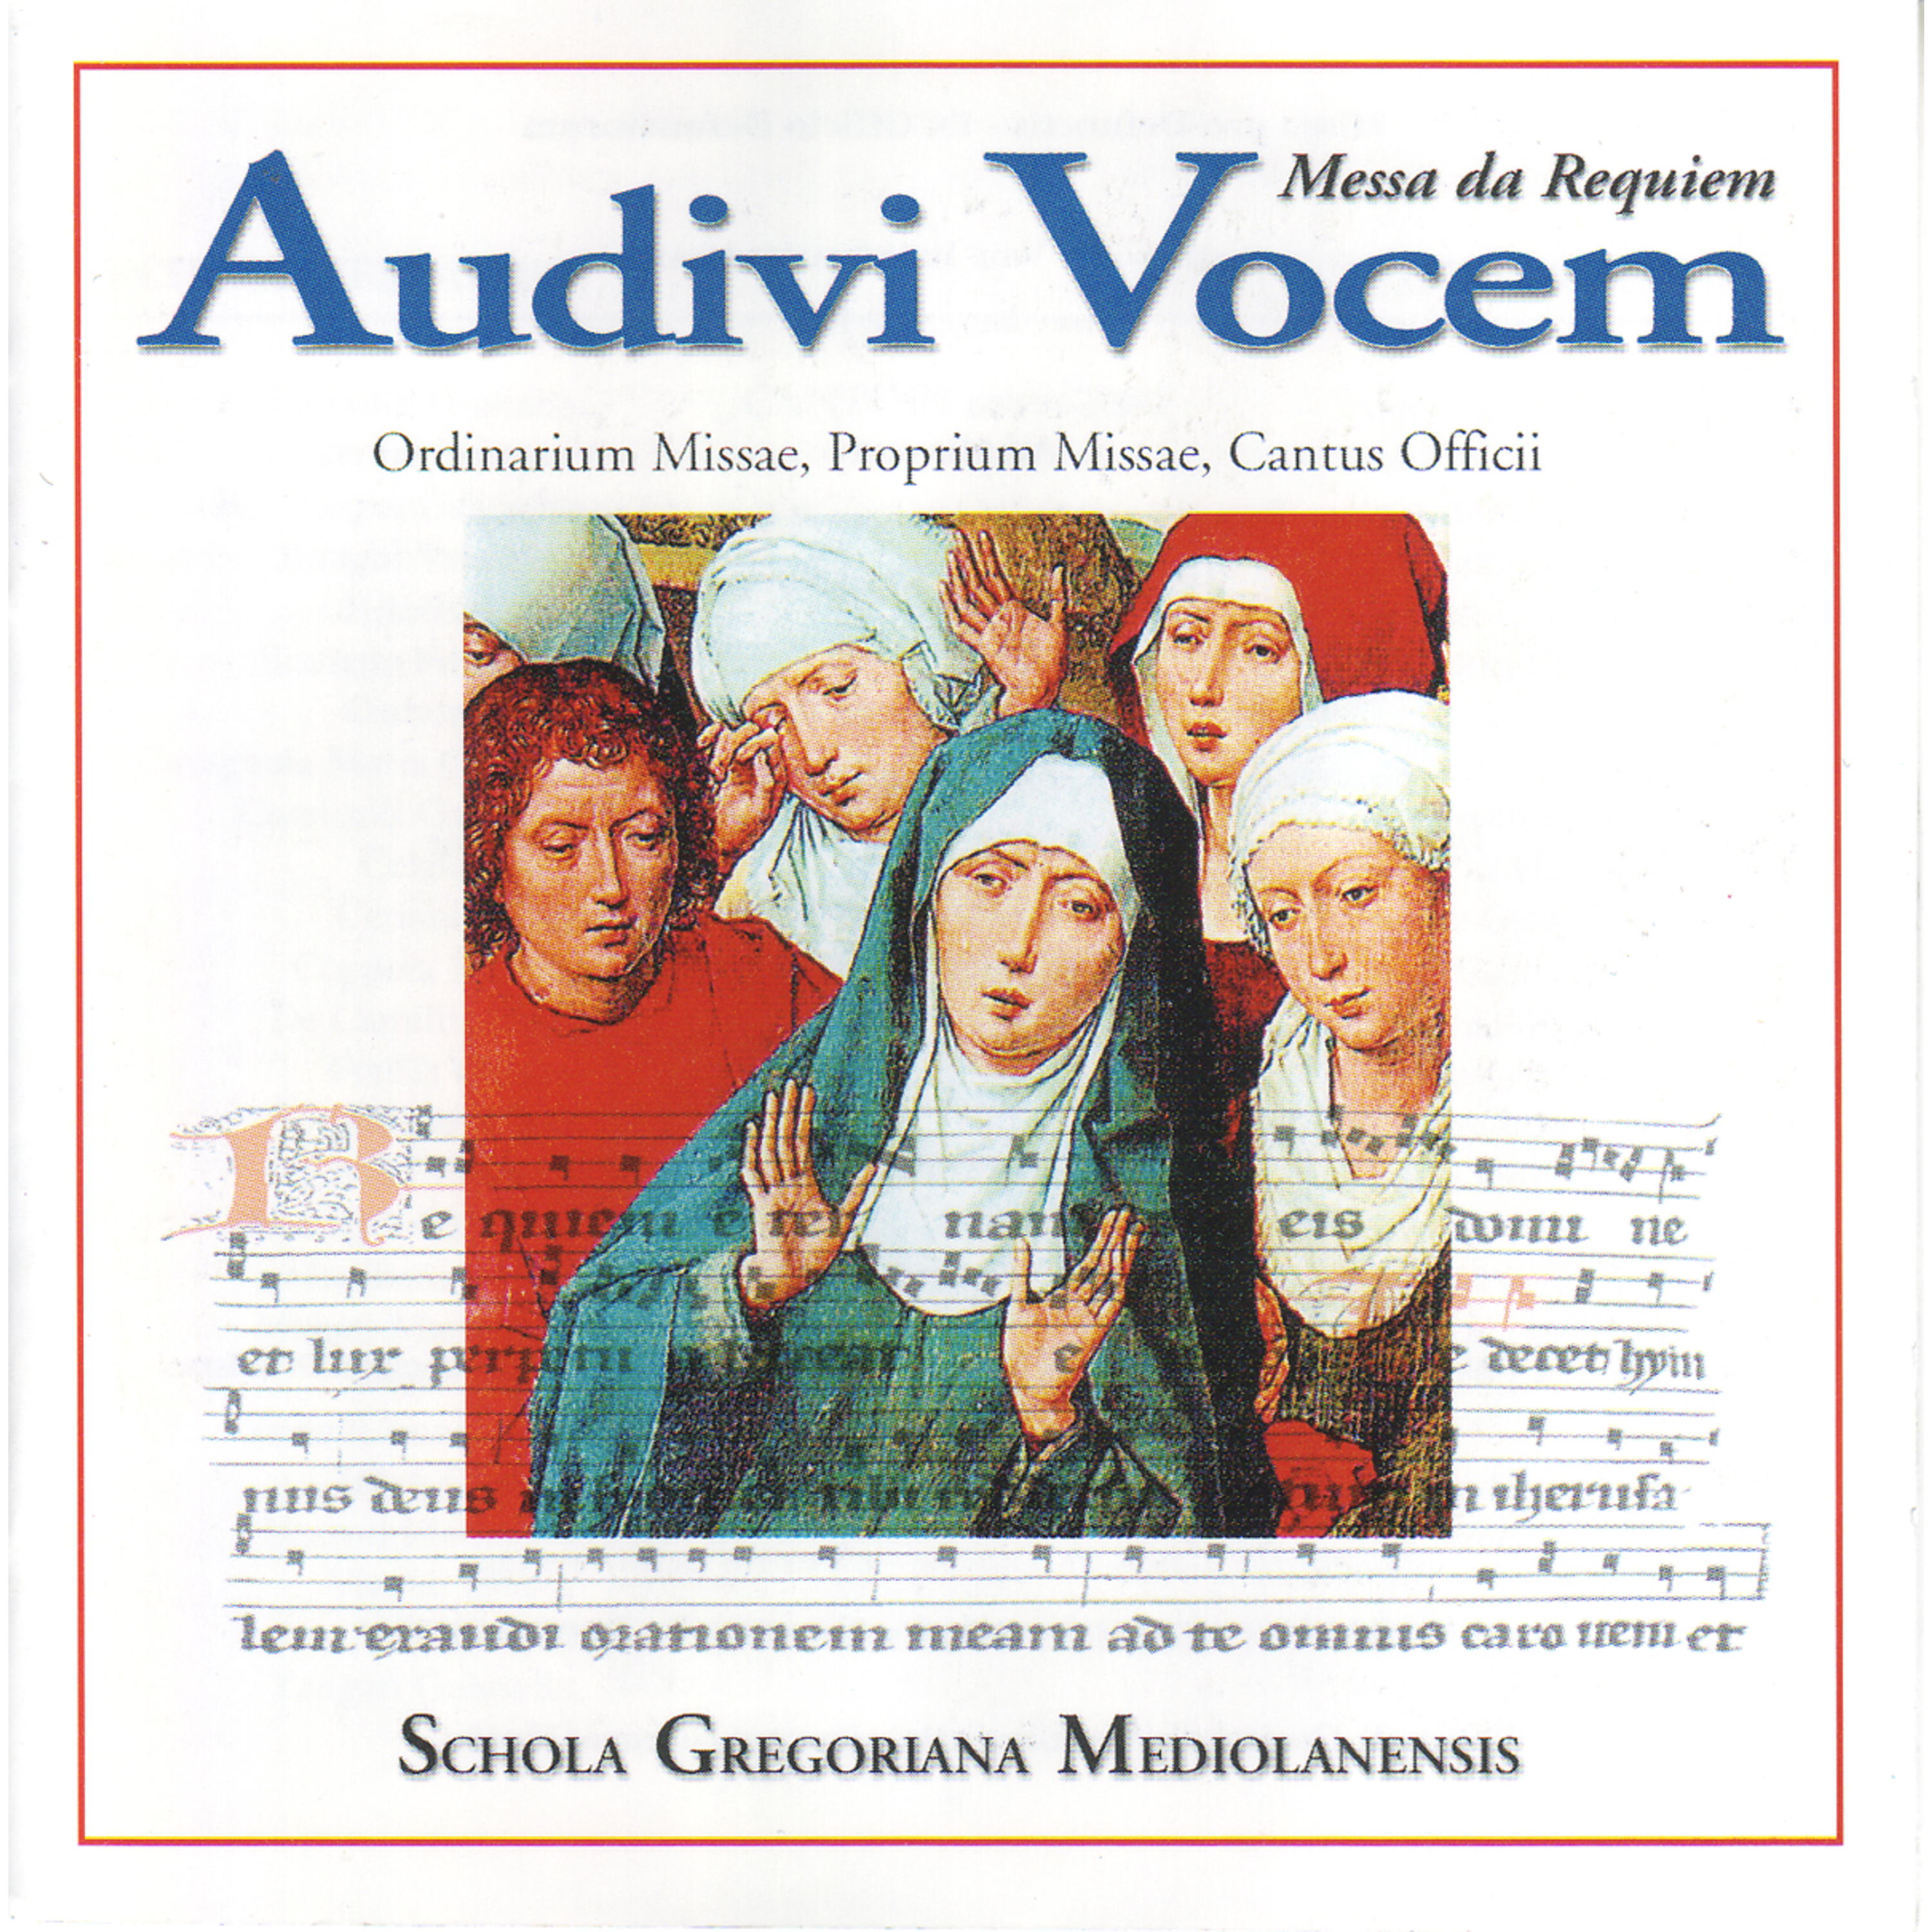 Messa da Requiem: Triplice invocazione: Agnus Dei